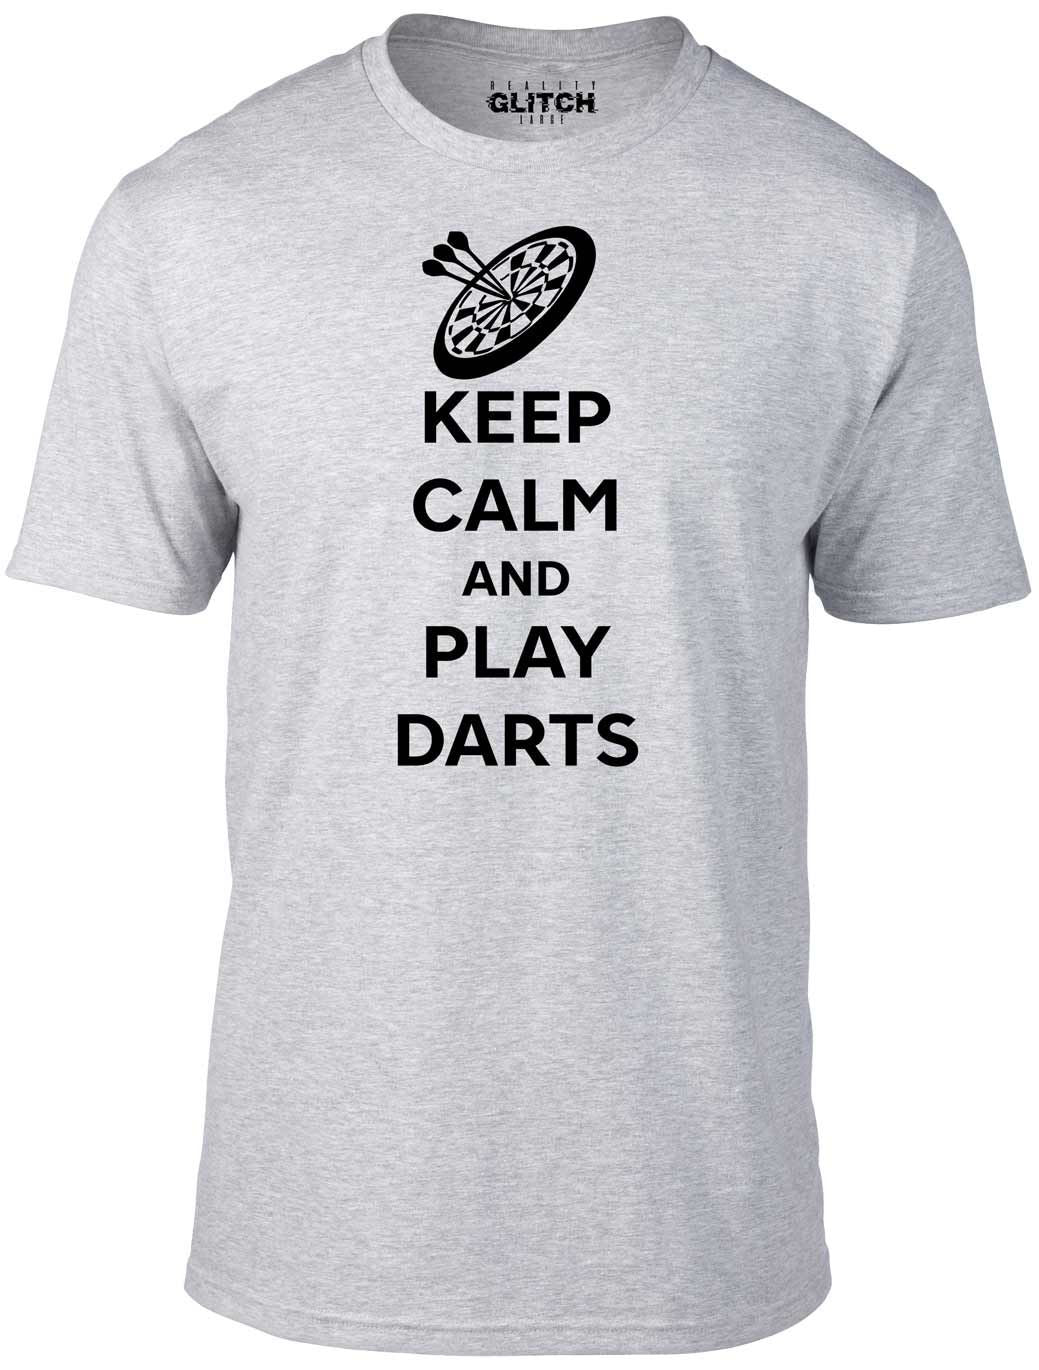 Men's Light Grey T-shirt With a Dart Board Printed Design